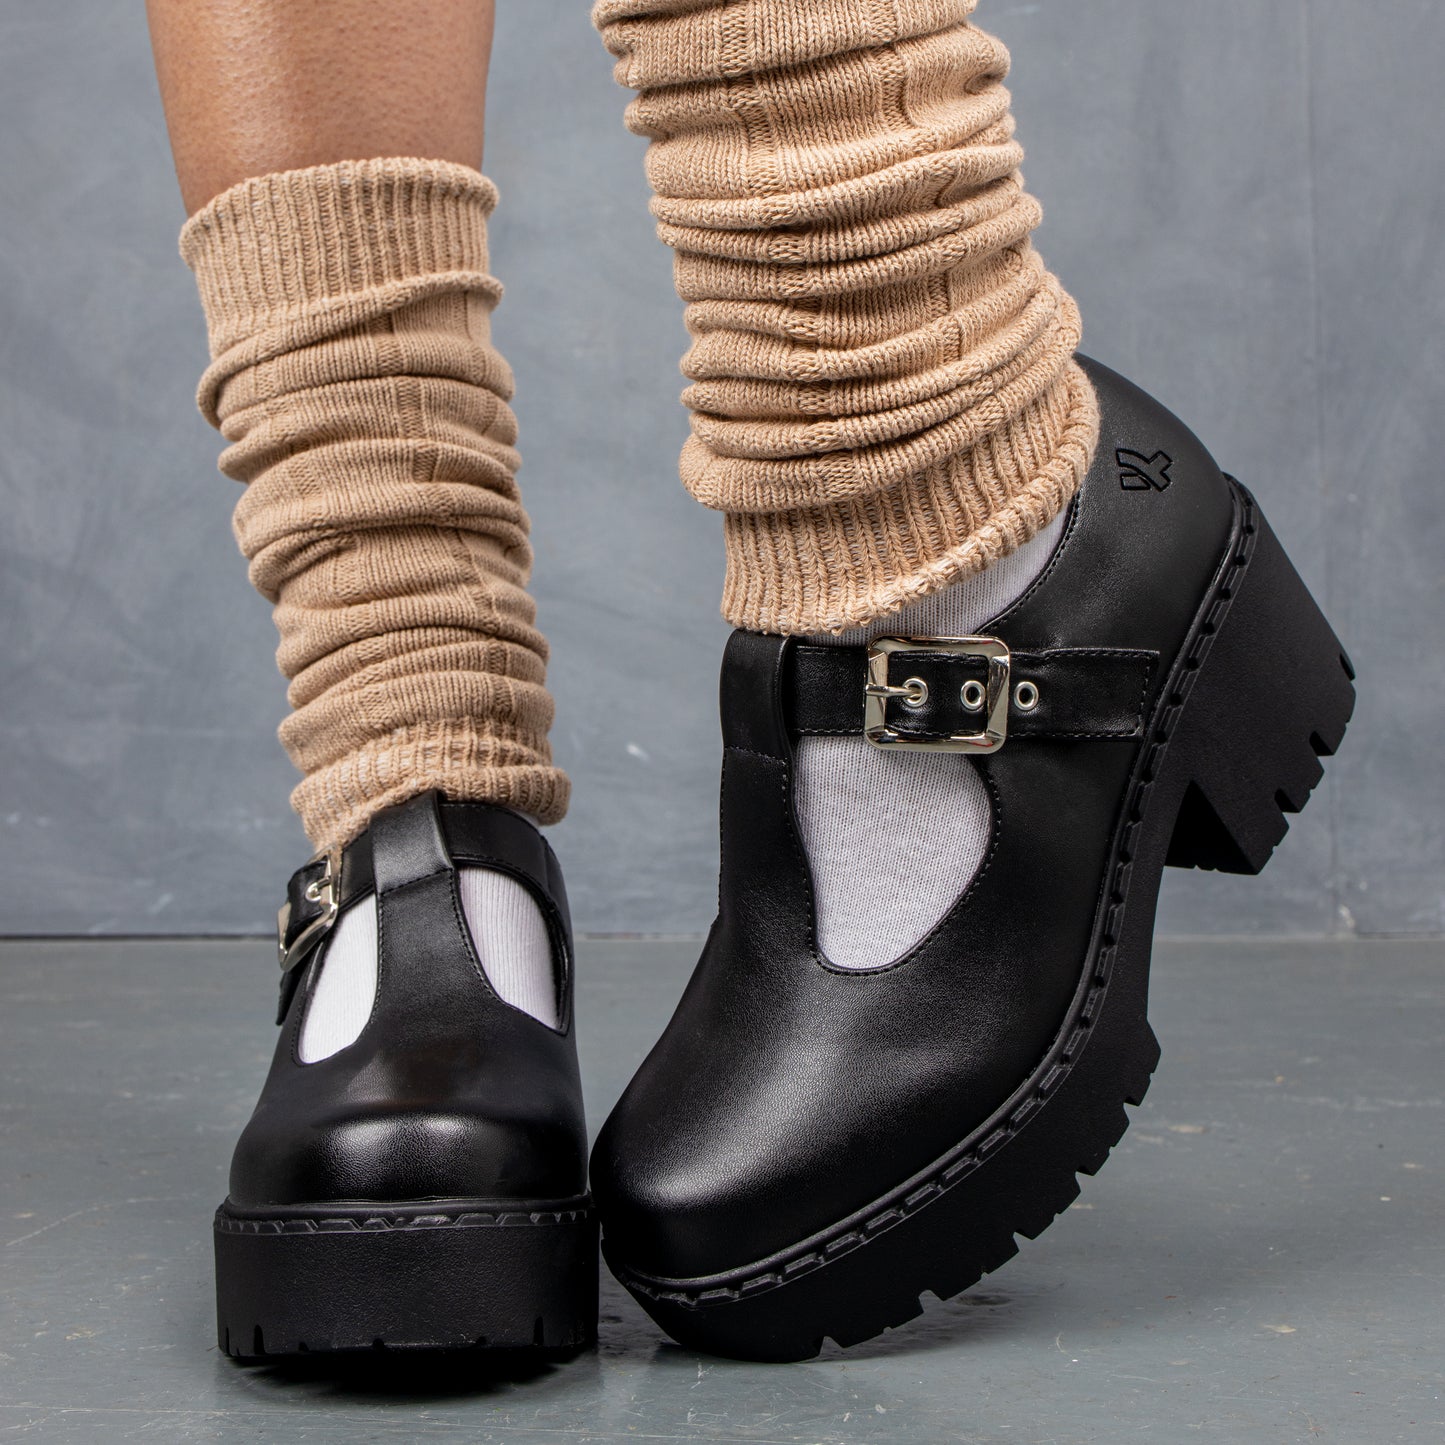 Kazuki Switch Mary Jane Shoes - Mary Janes - KOI Footwear - Black - Model Front View